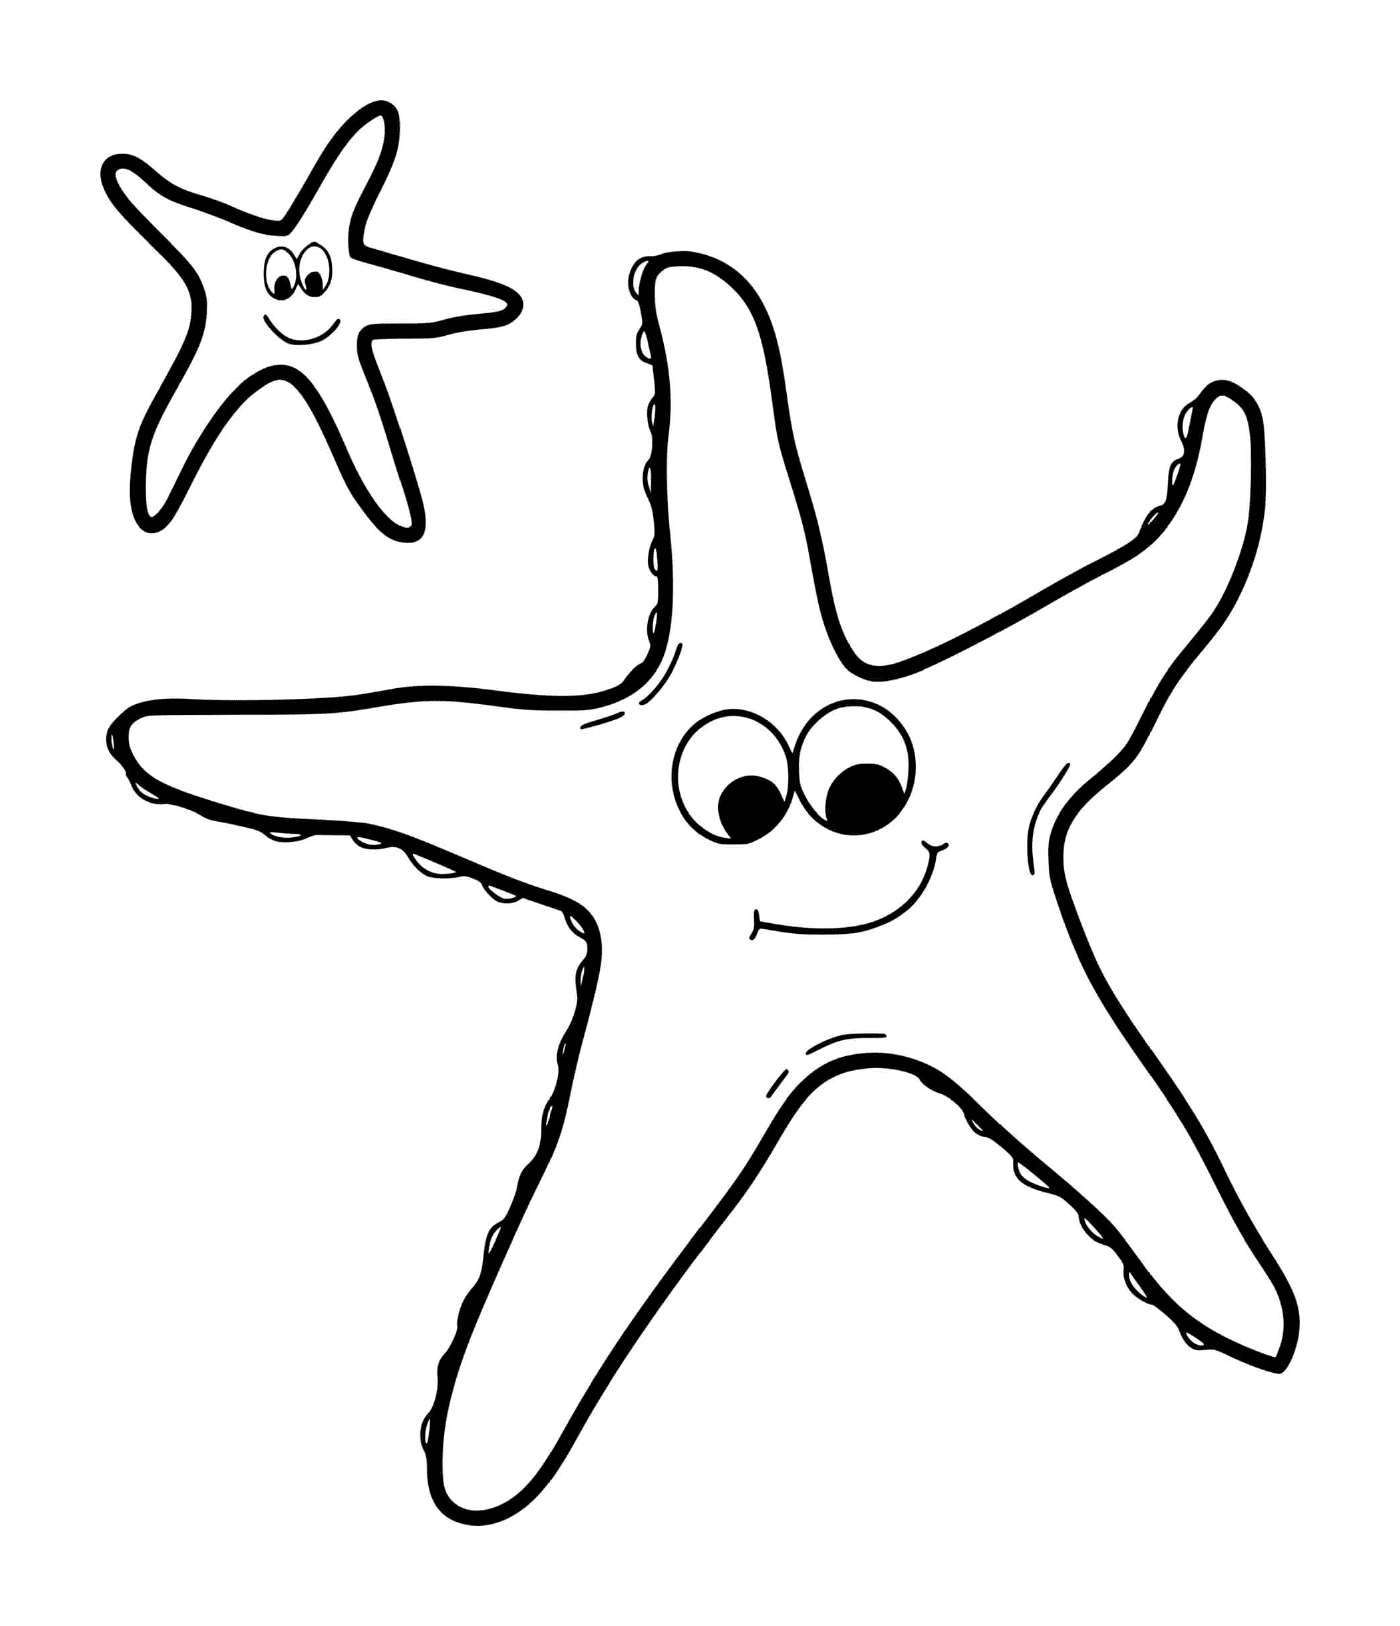  Two smiling starfish 